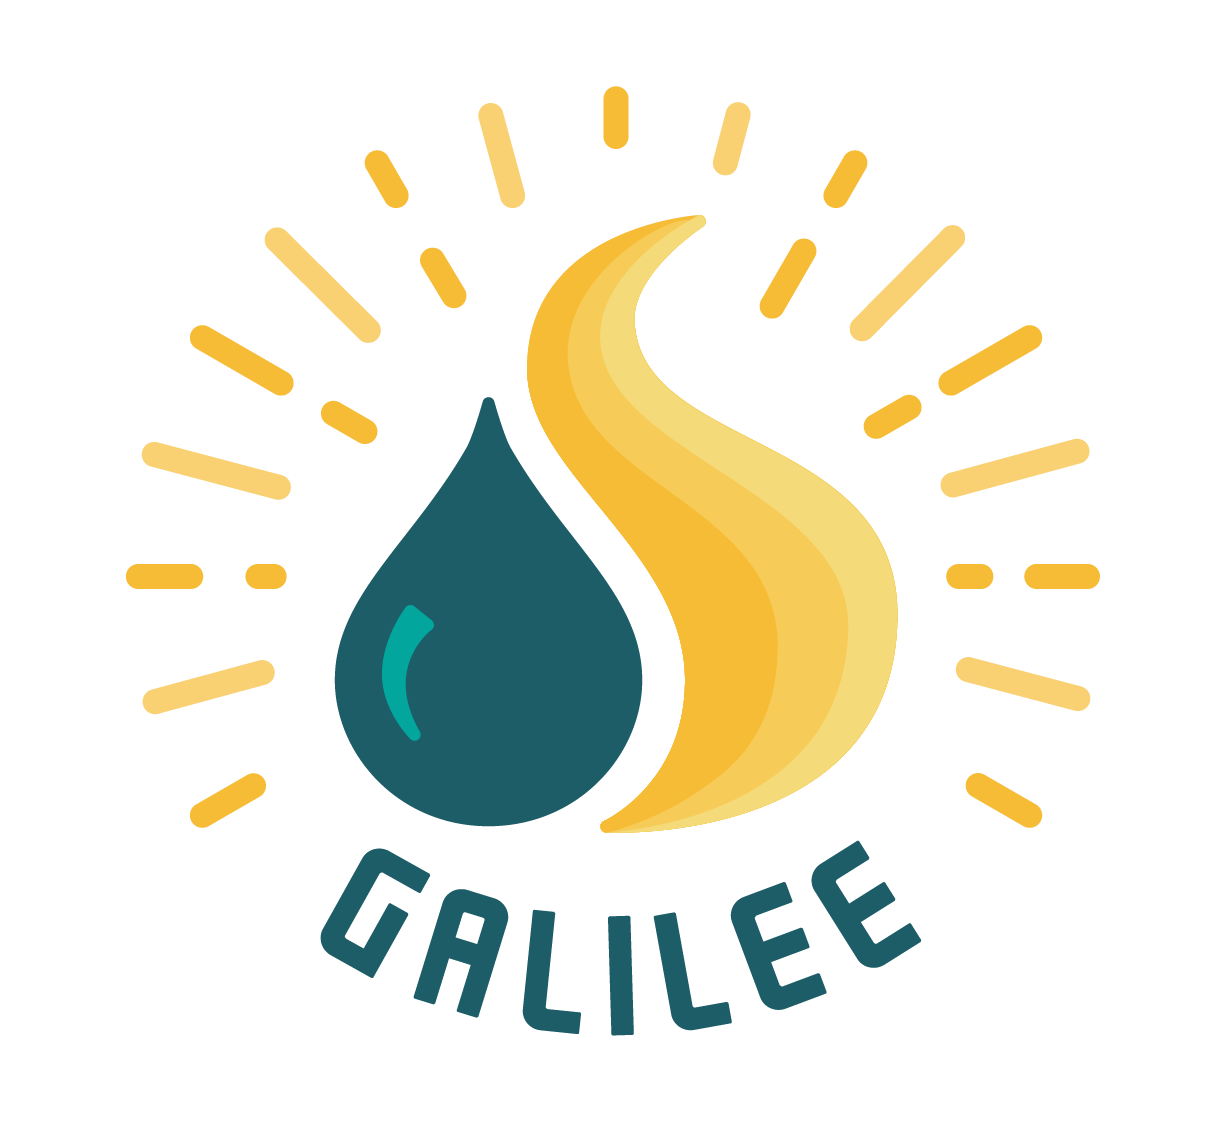 Go To Galilee logo